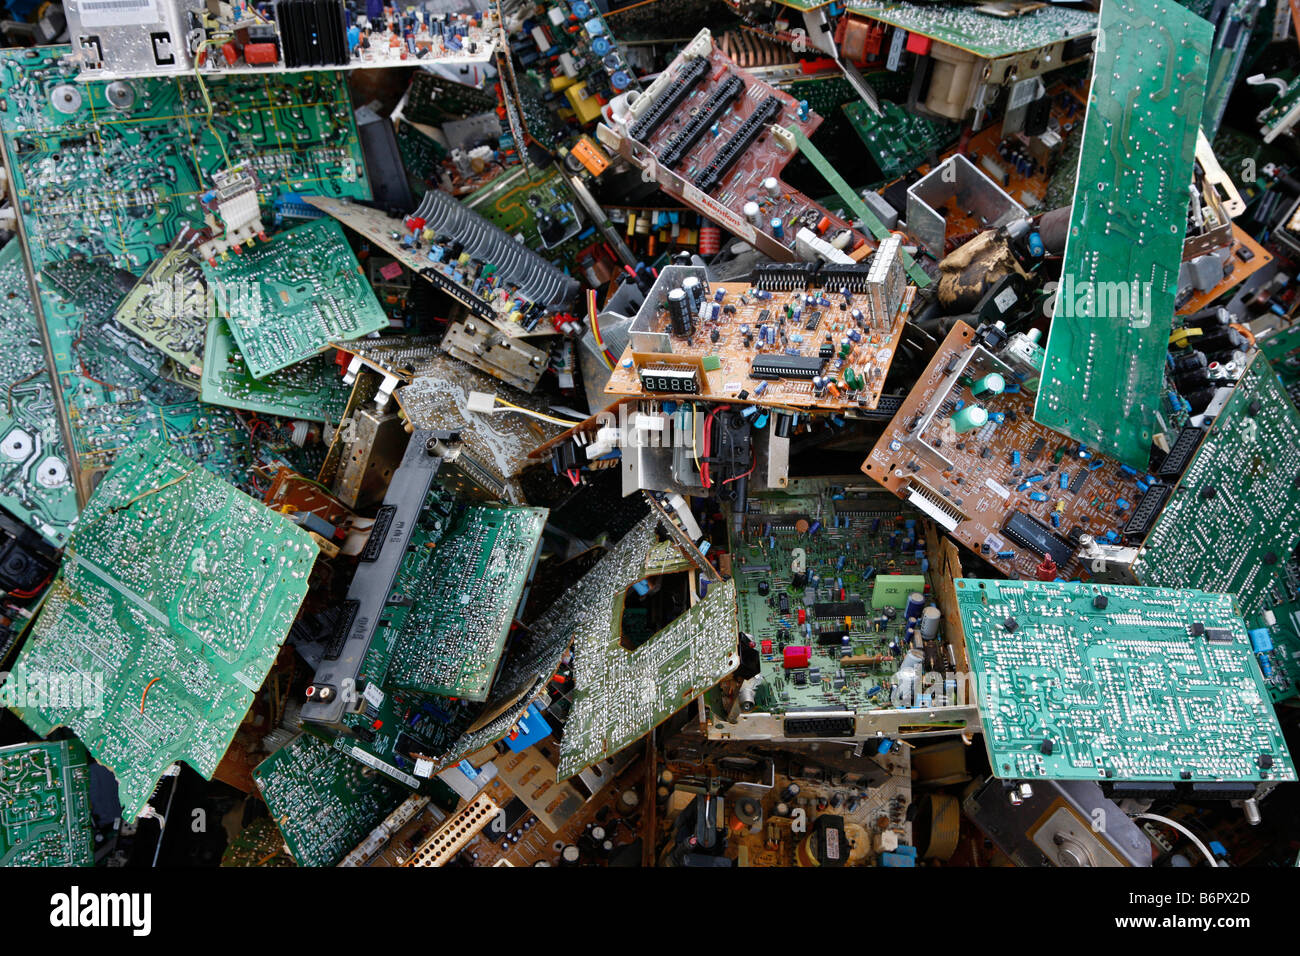 Elektronikschrott, gebraucht alt Computer-Teile für das recycling  Stockfotografie - Alamy